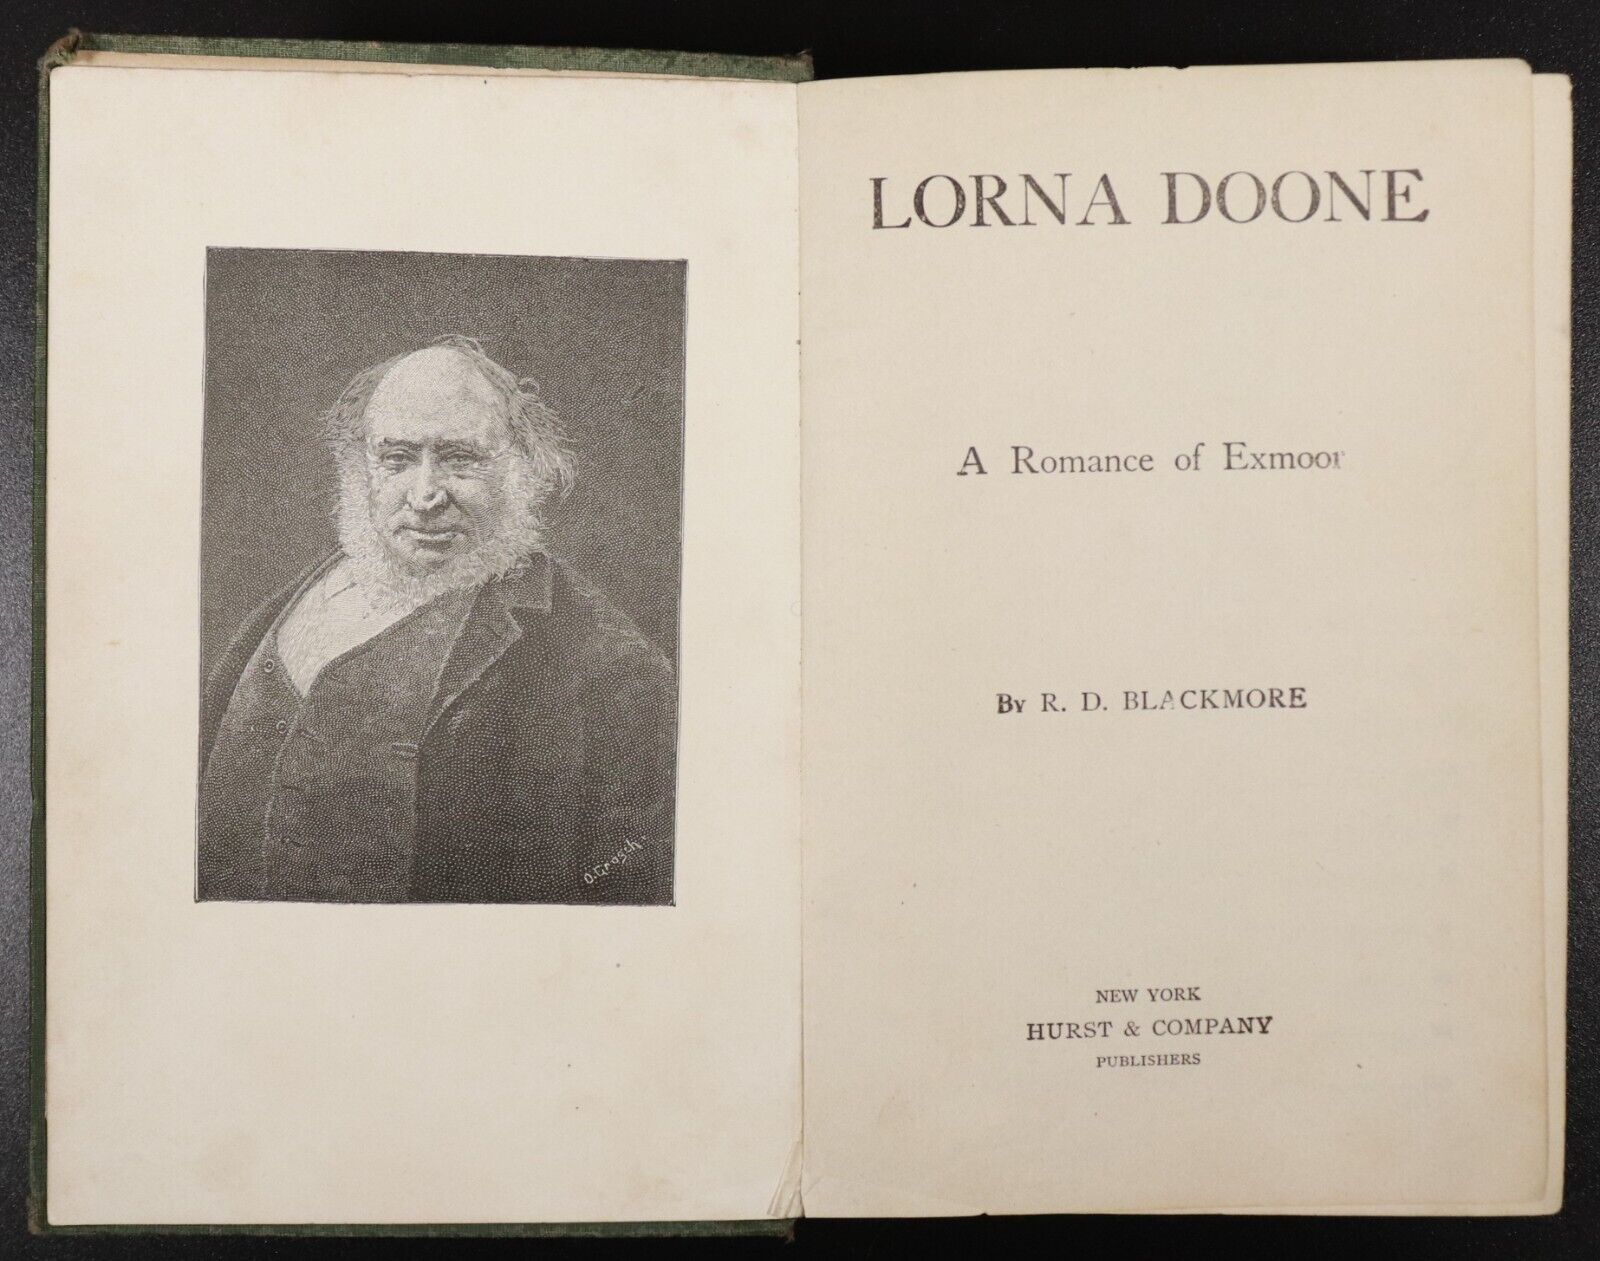 c1900 Lorna Doone Romance Exmoor by R.D. Blackmore Antique Classic Fiction Book